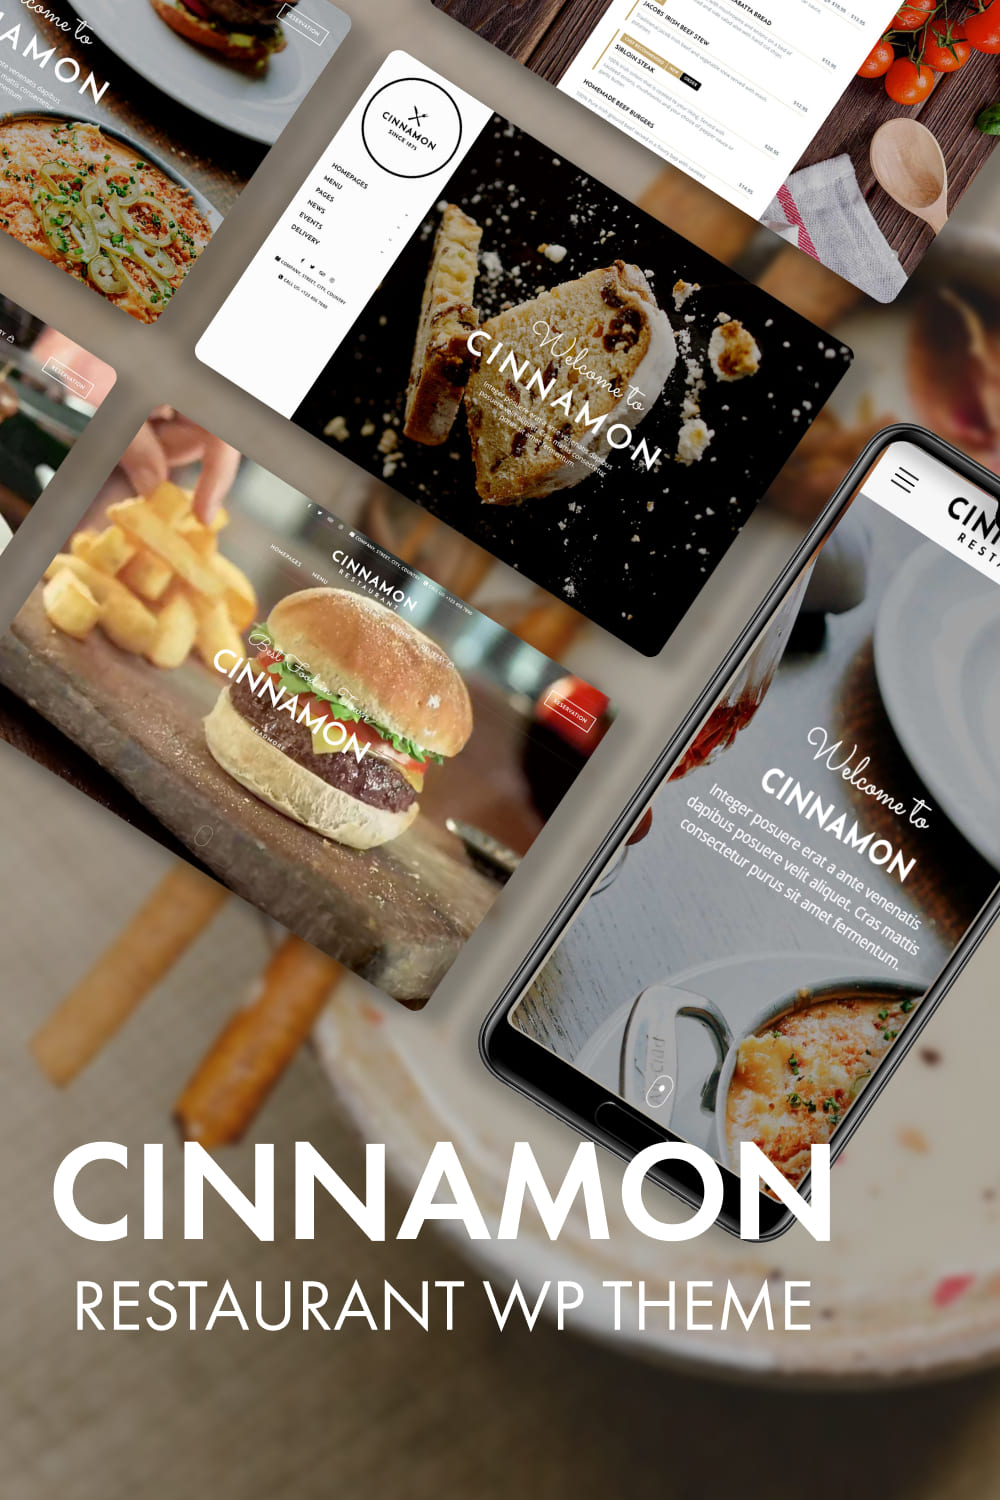 Cinnamon Restaurant Theme for WordPress.